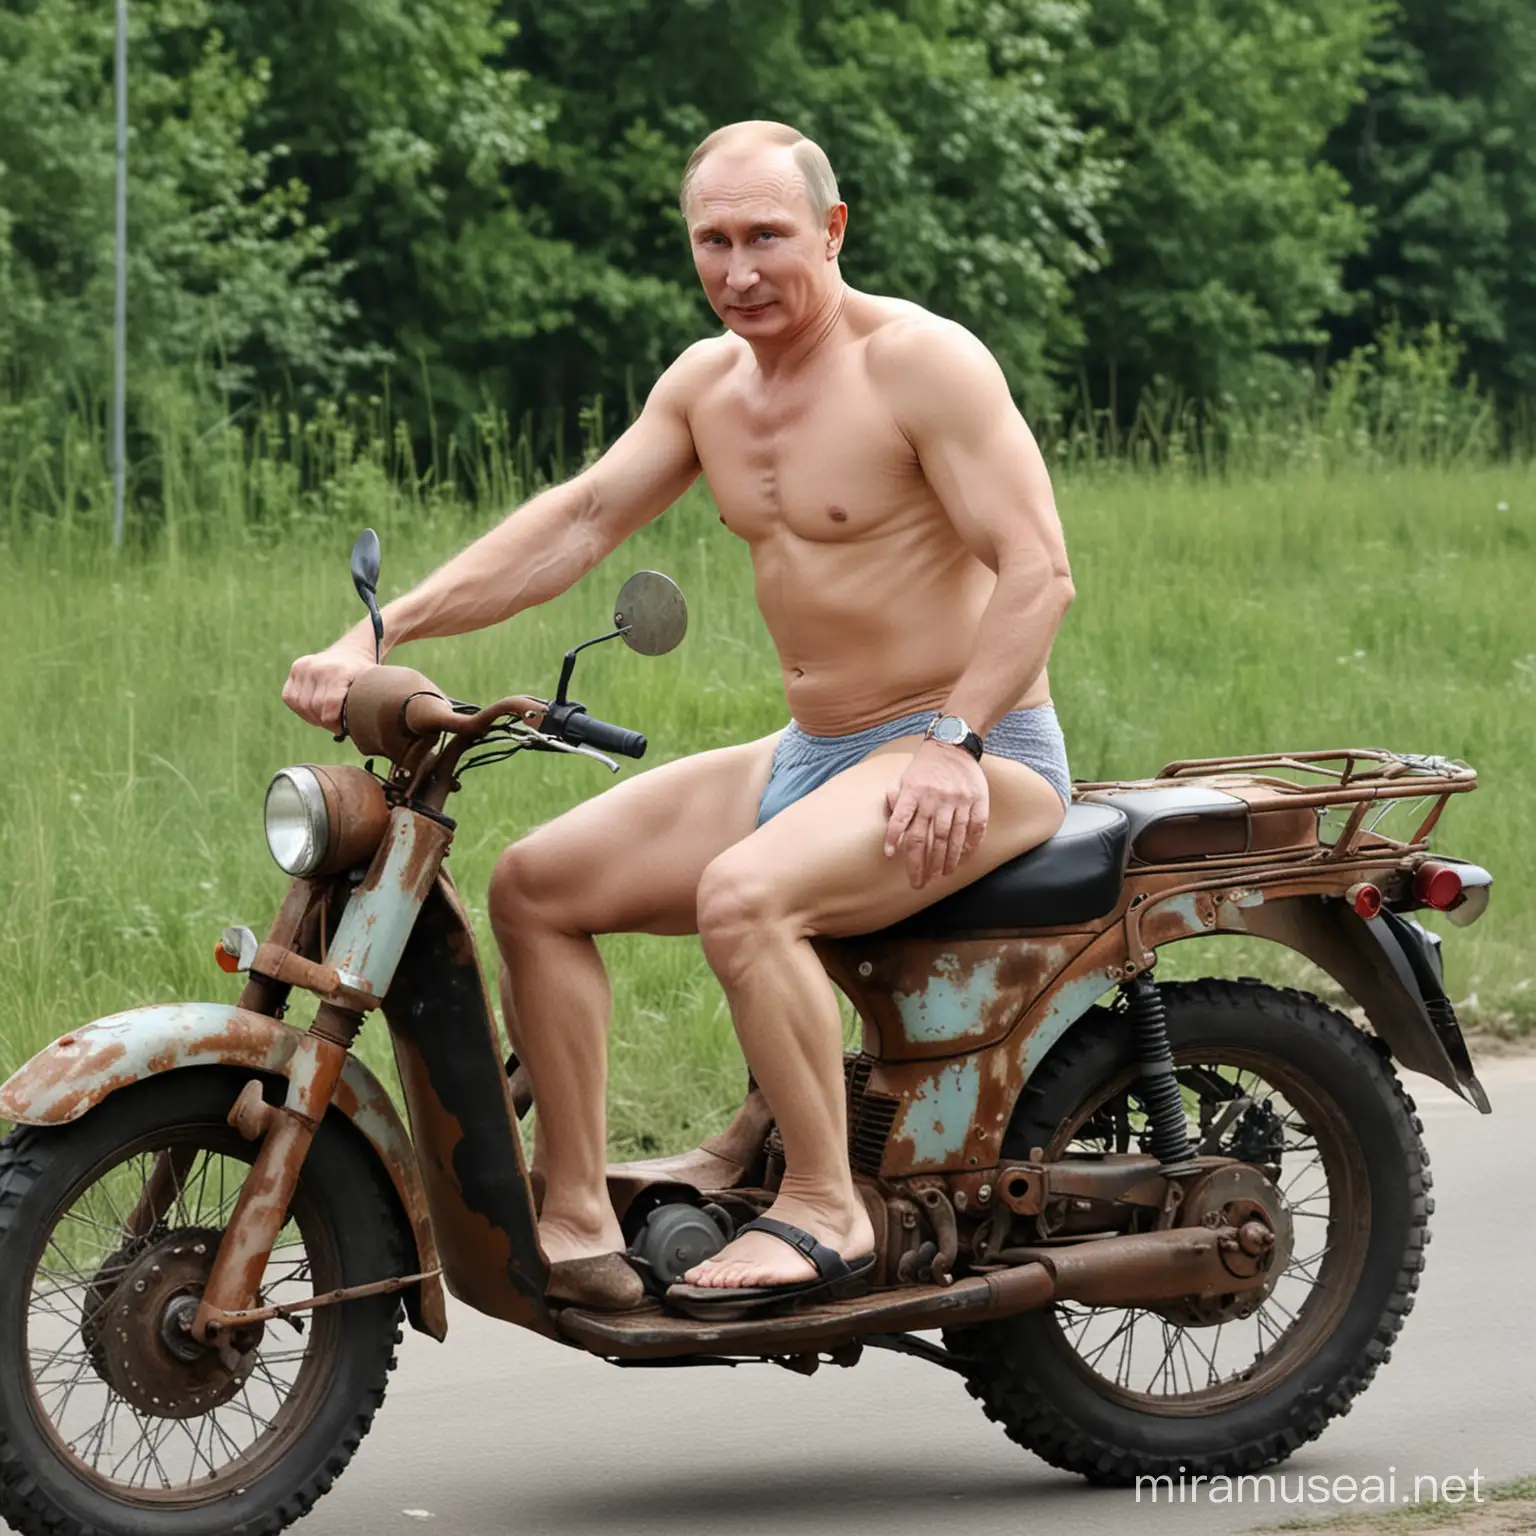 Russian President Putin Riding Rusty Moped in Underwear